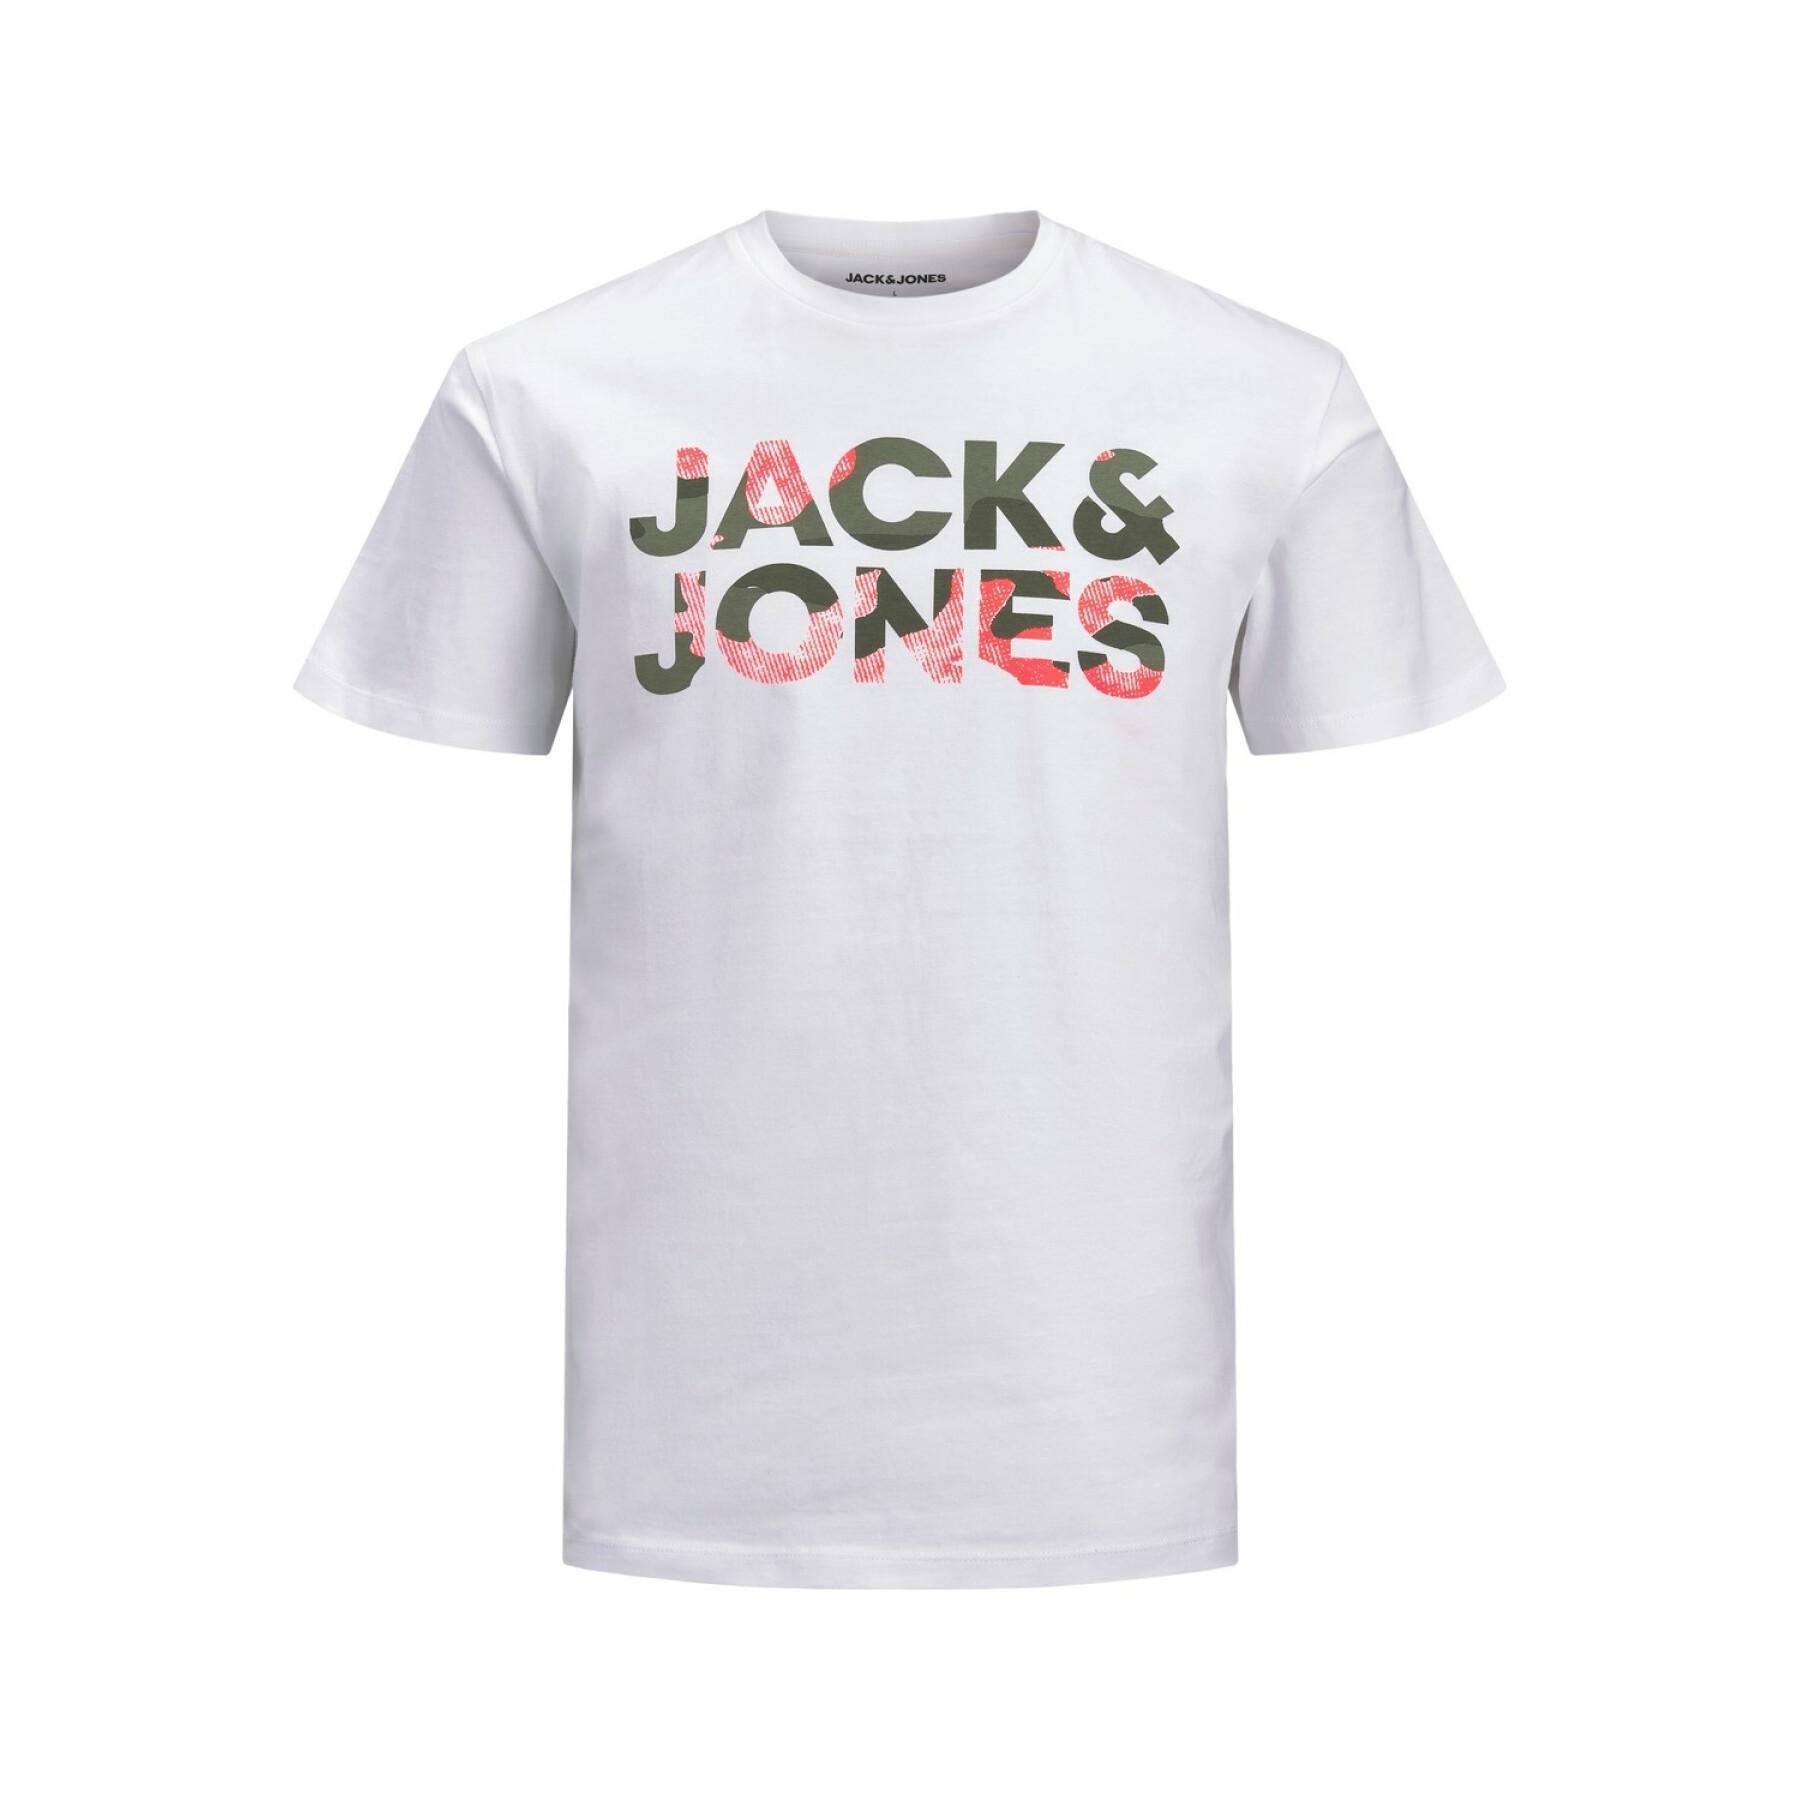 Logo T-shirt Jack & Jones imprimé